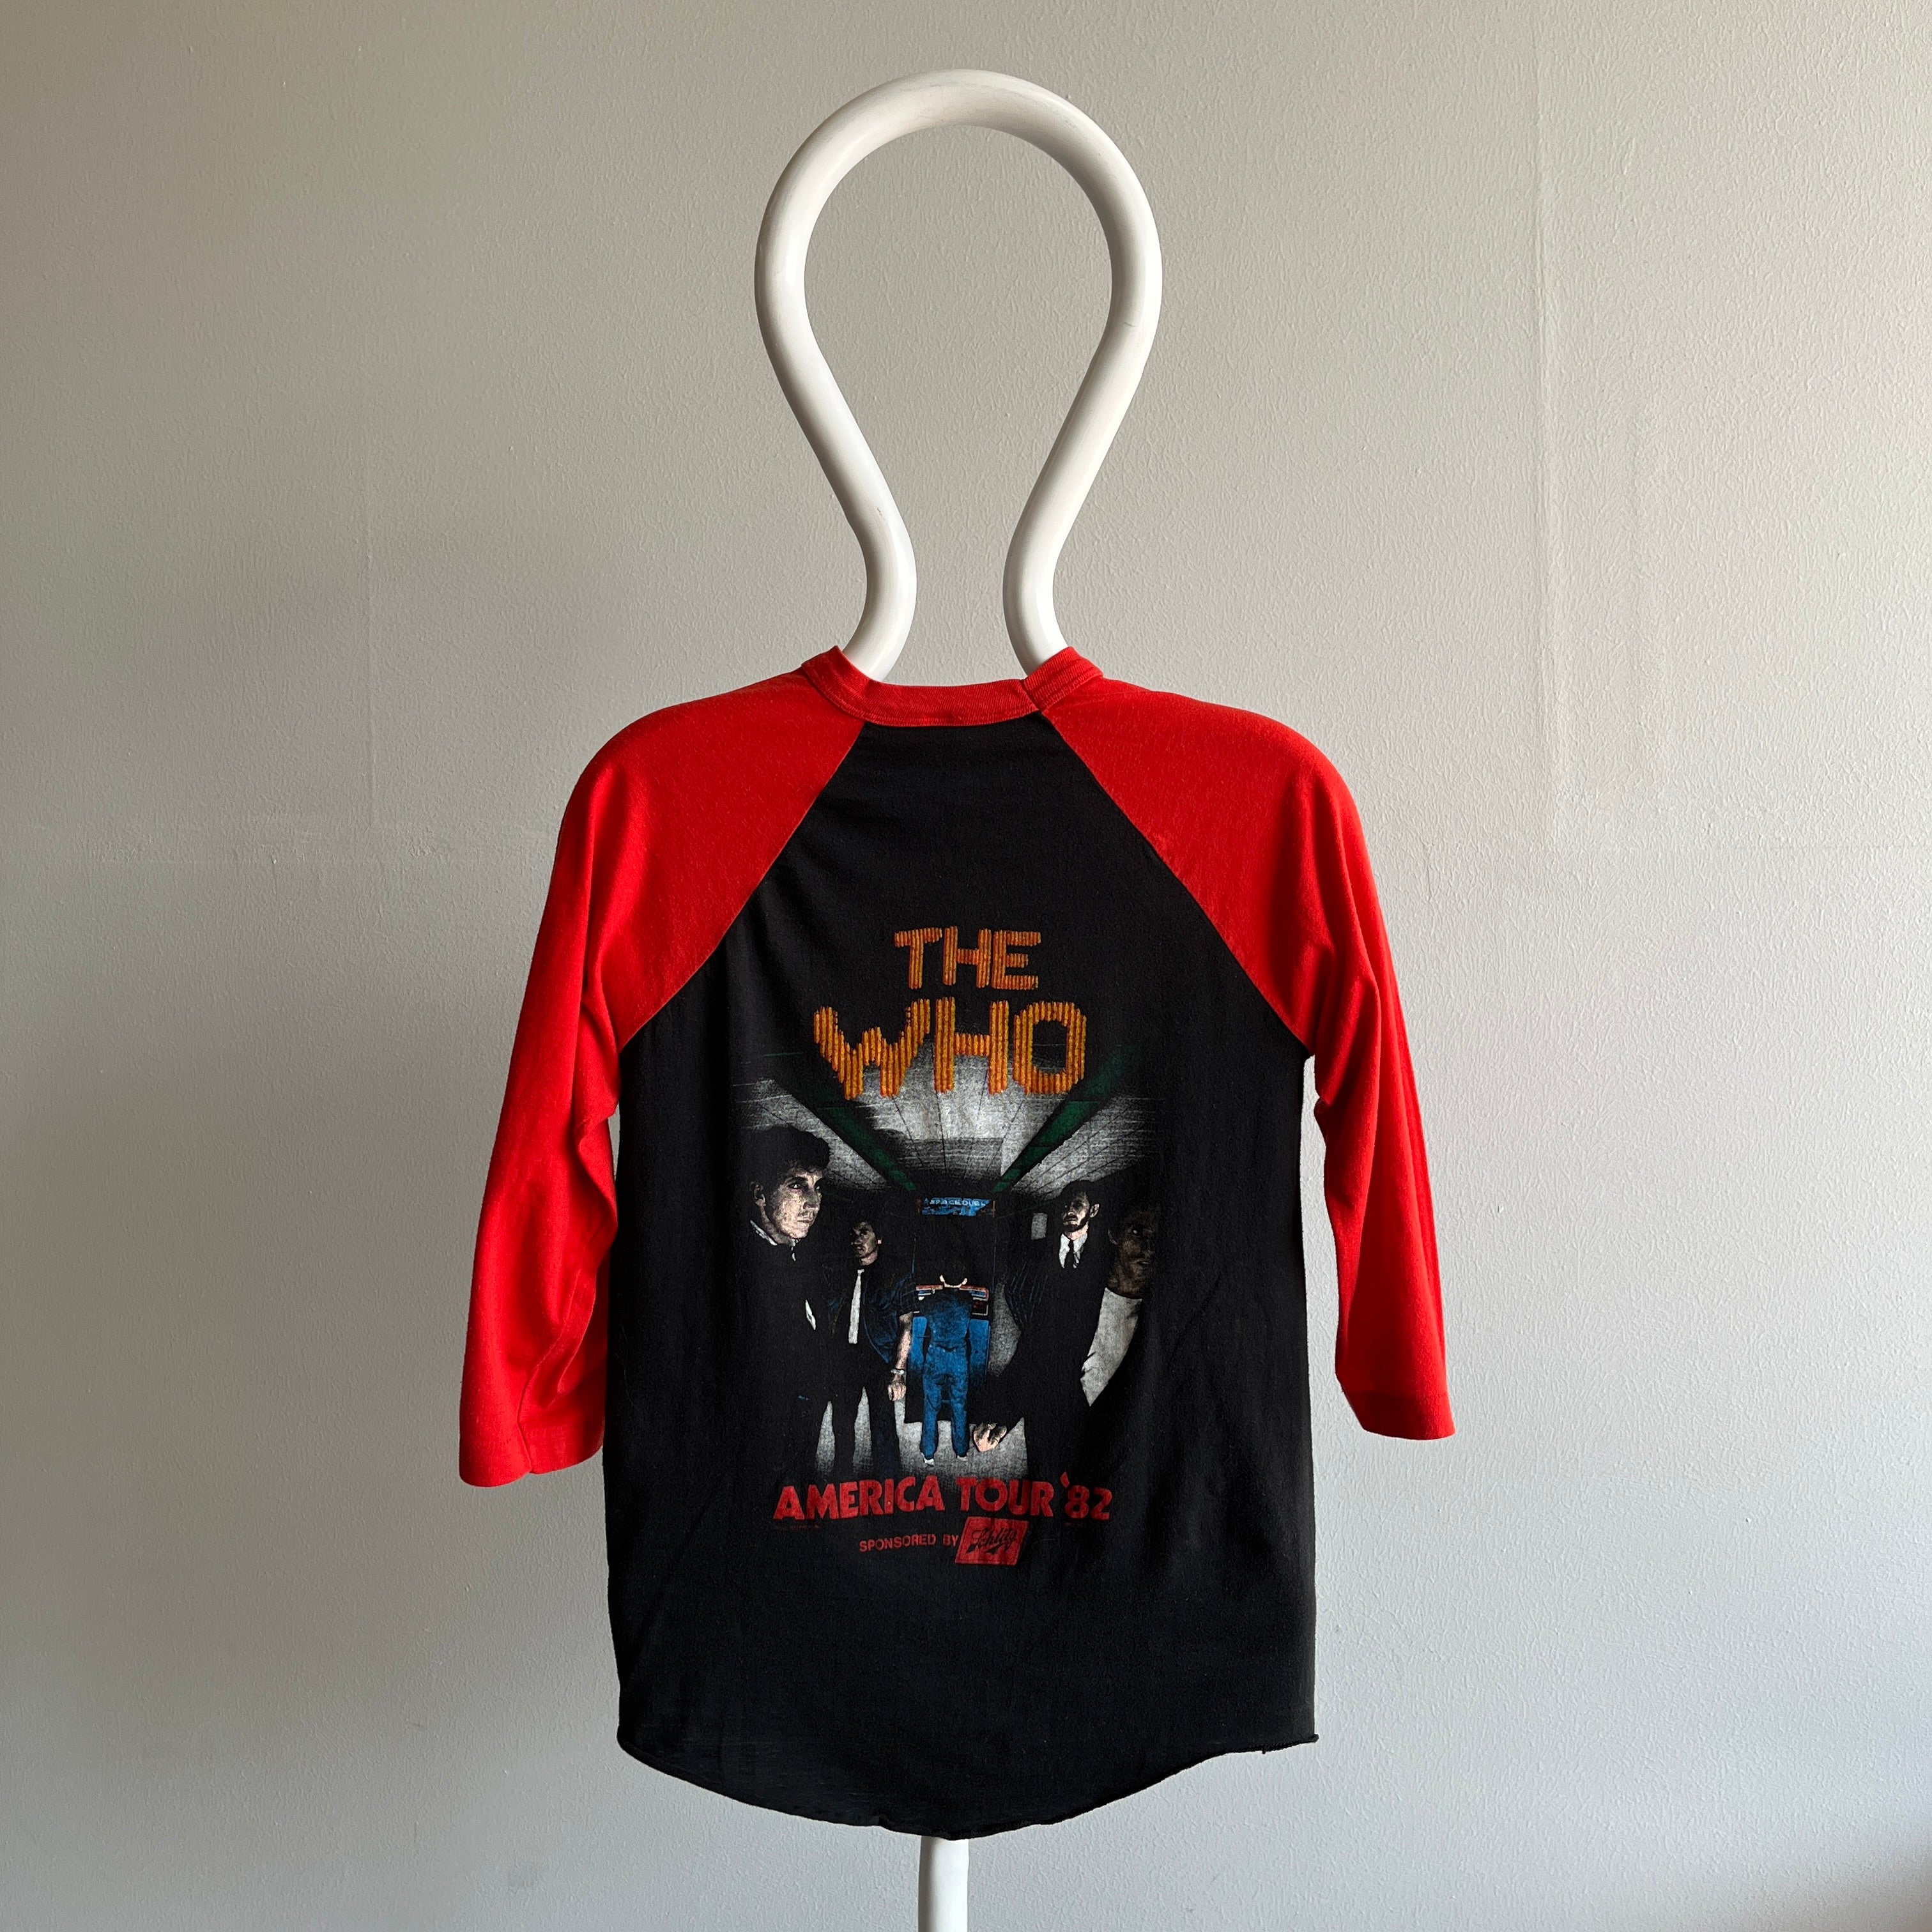 1982 The Who INSANE Front and Back Baseball T-Shirt - WOAH